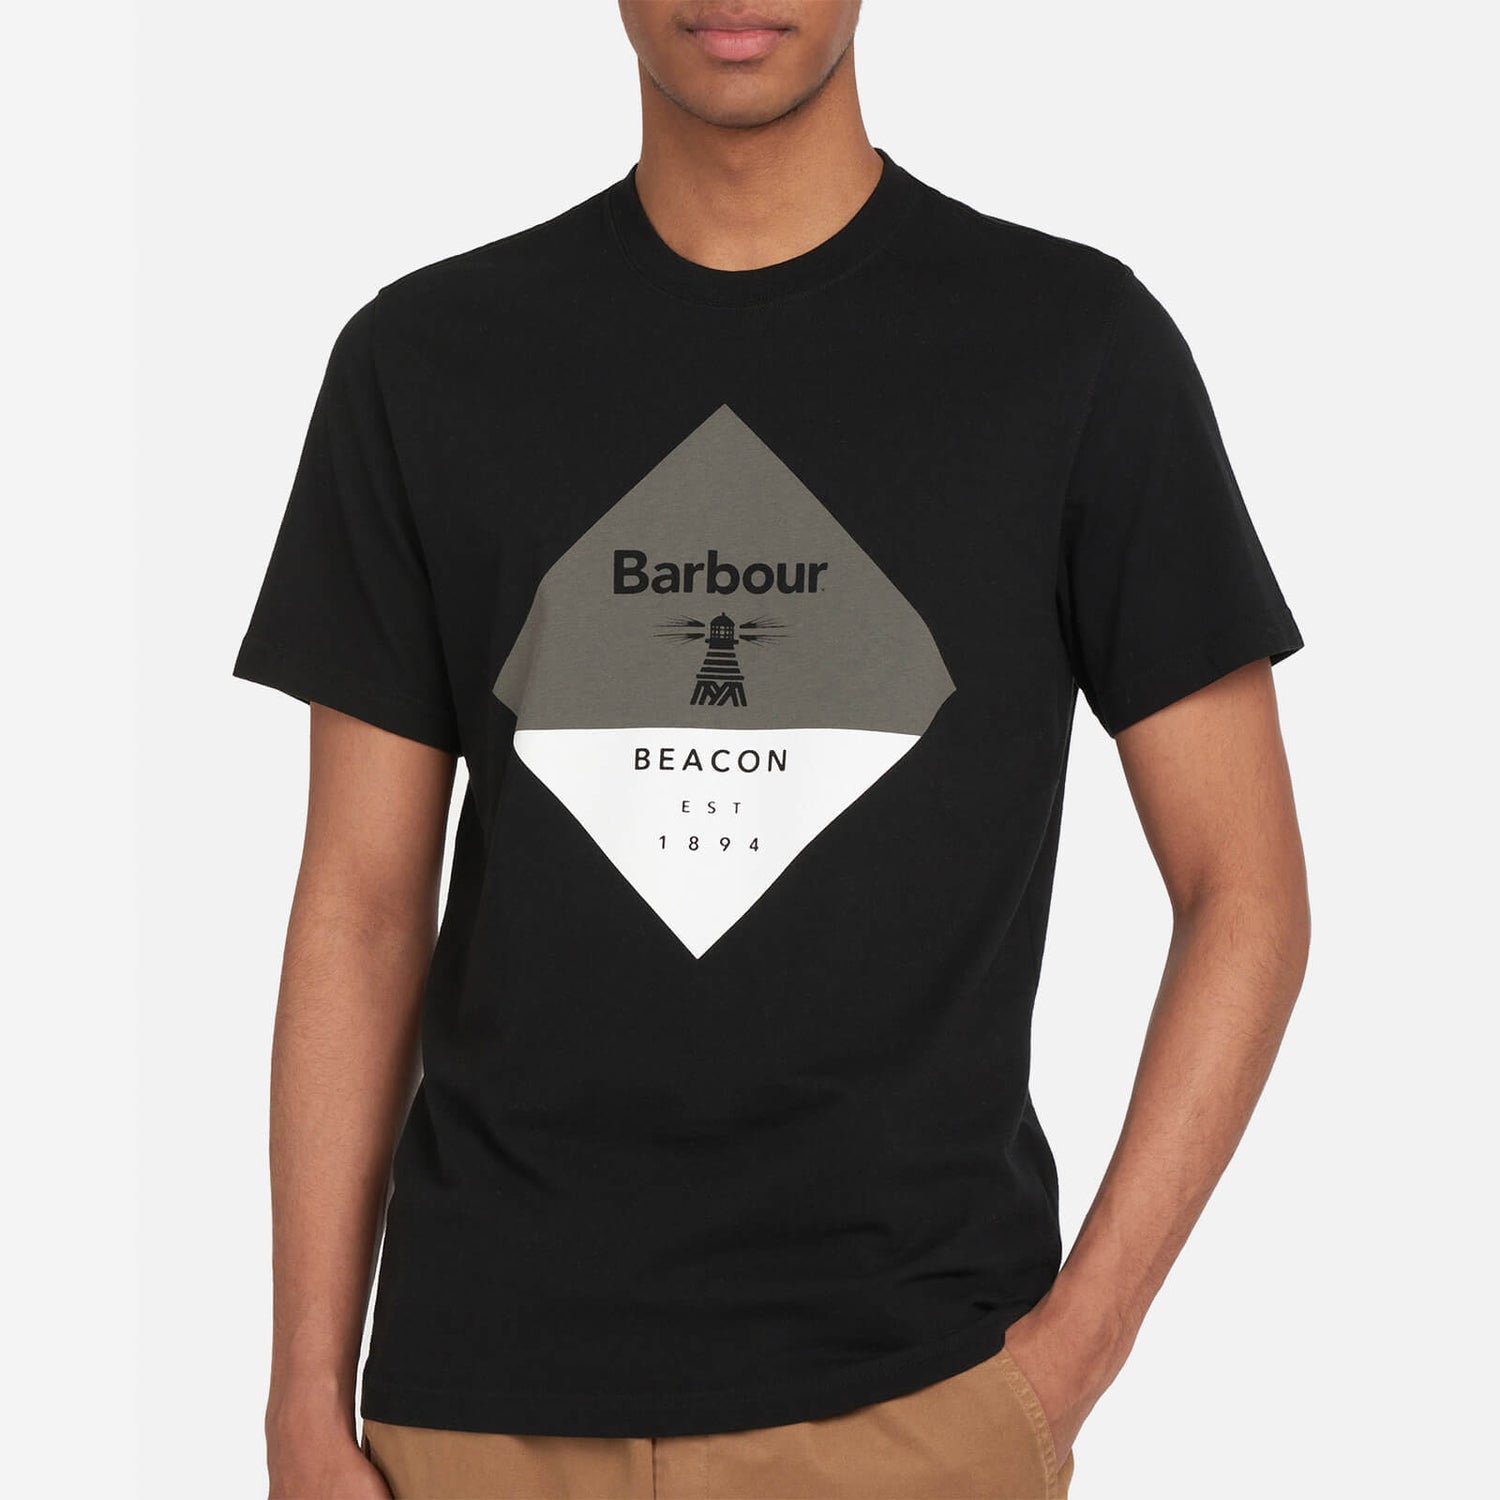 Barbour Beacon Men's Diamond T-Shirt - Black - S